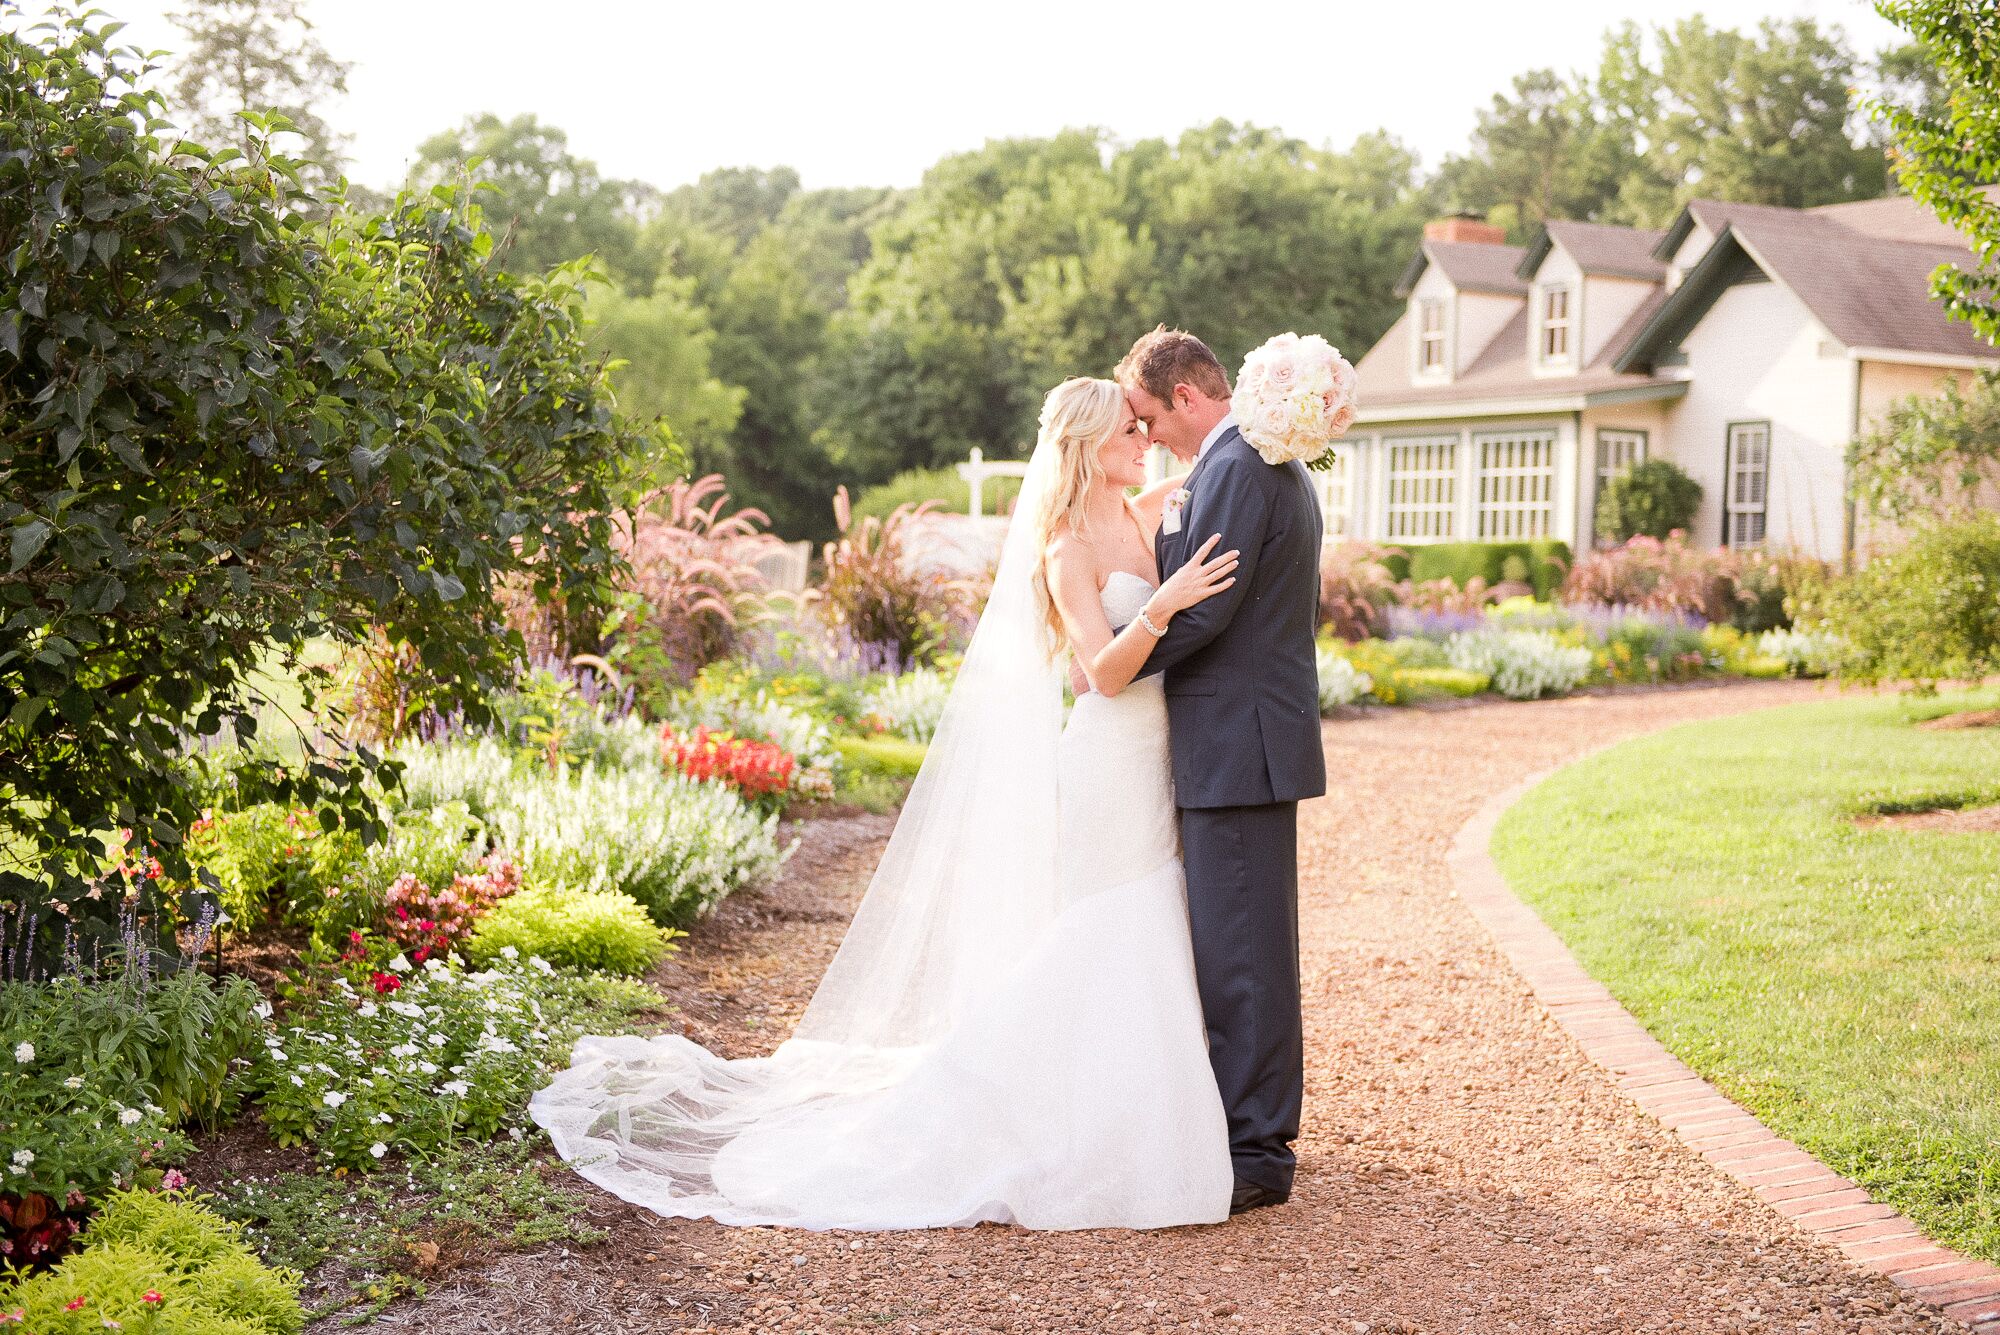 A Romantic Alfresco Wedding  at Barnsley Gardens Resort in 